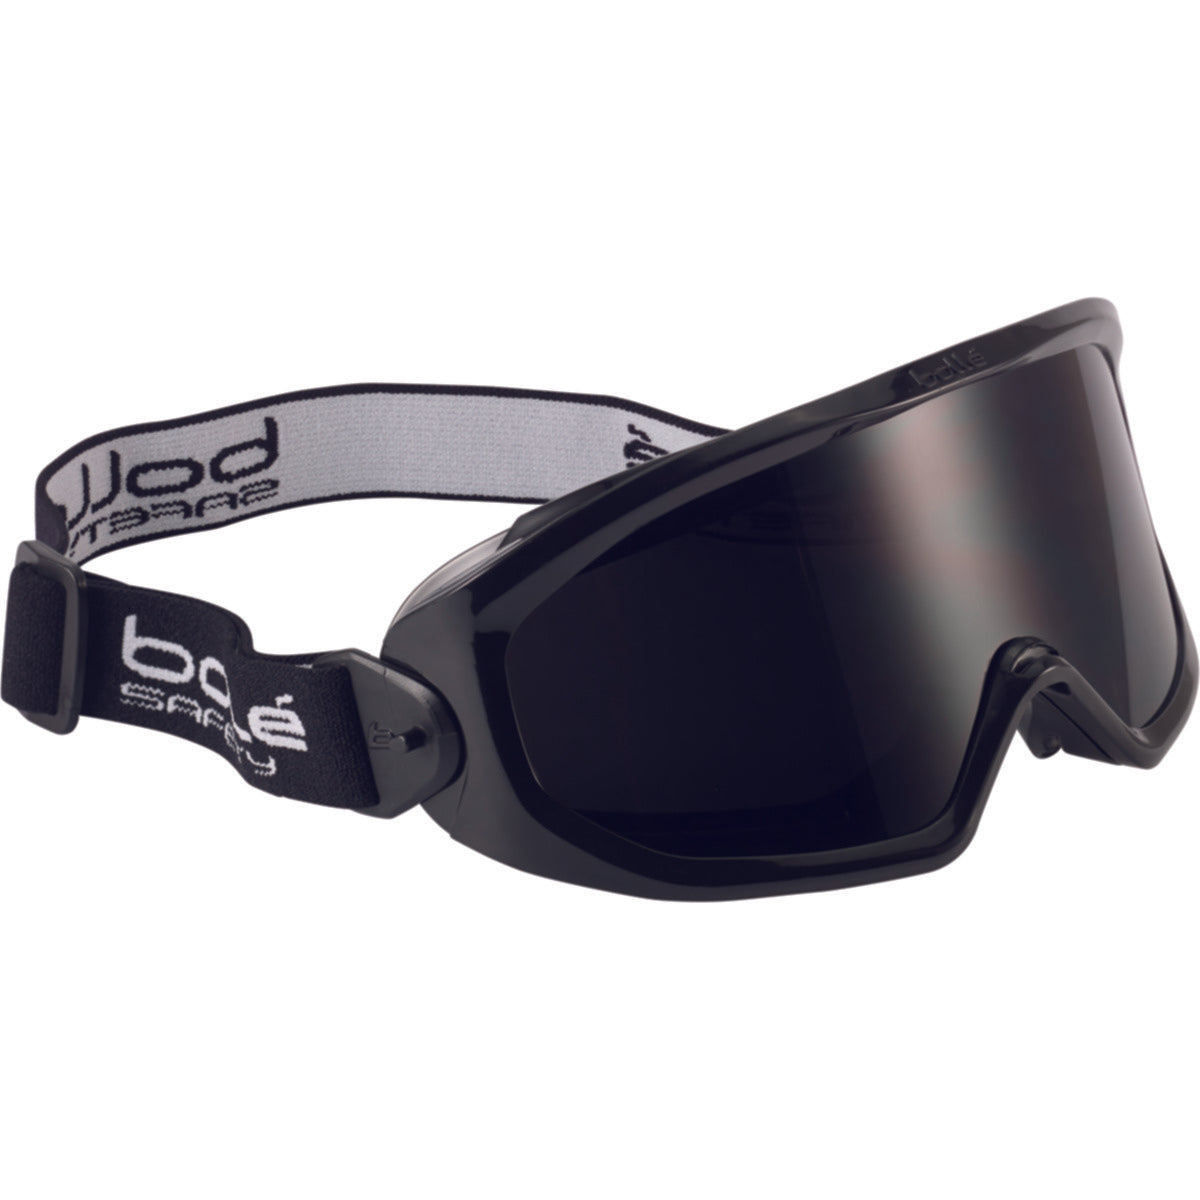 Bollé Safety Superblast Welding Safety Goggles